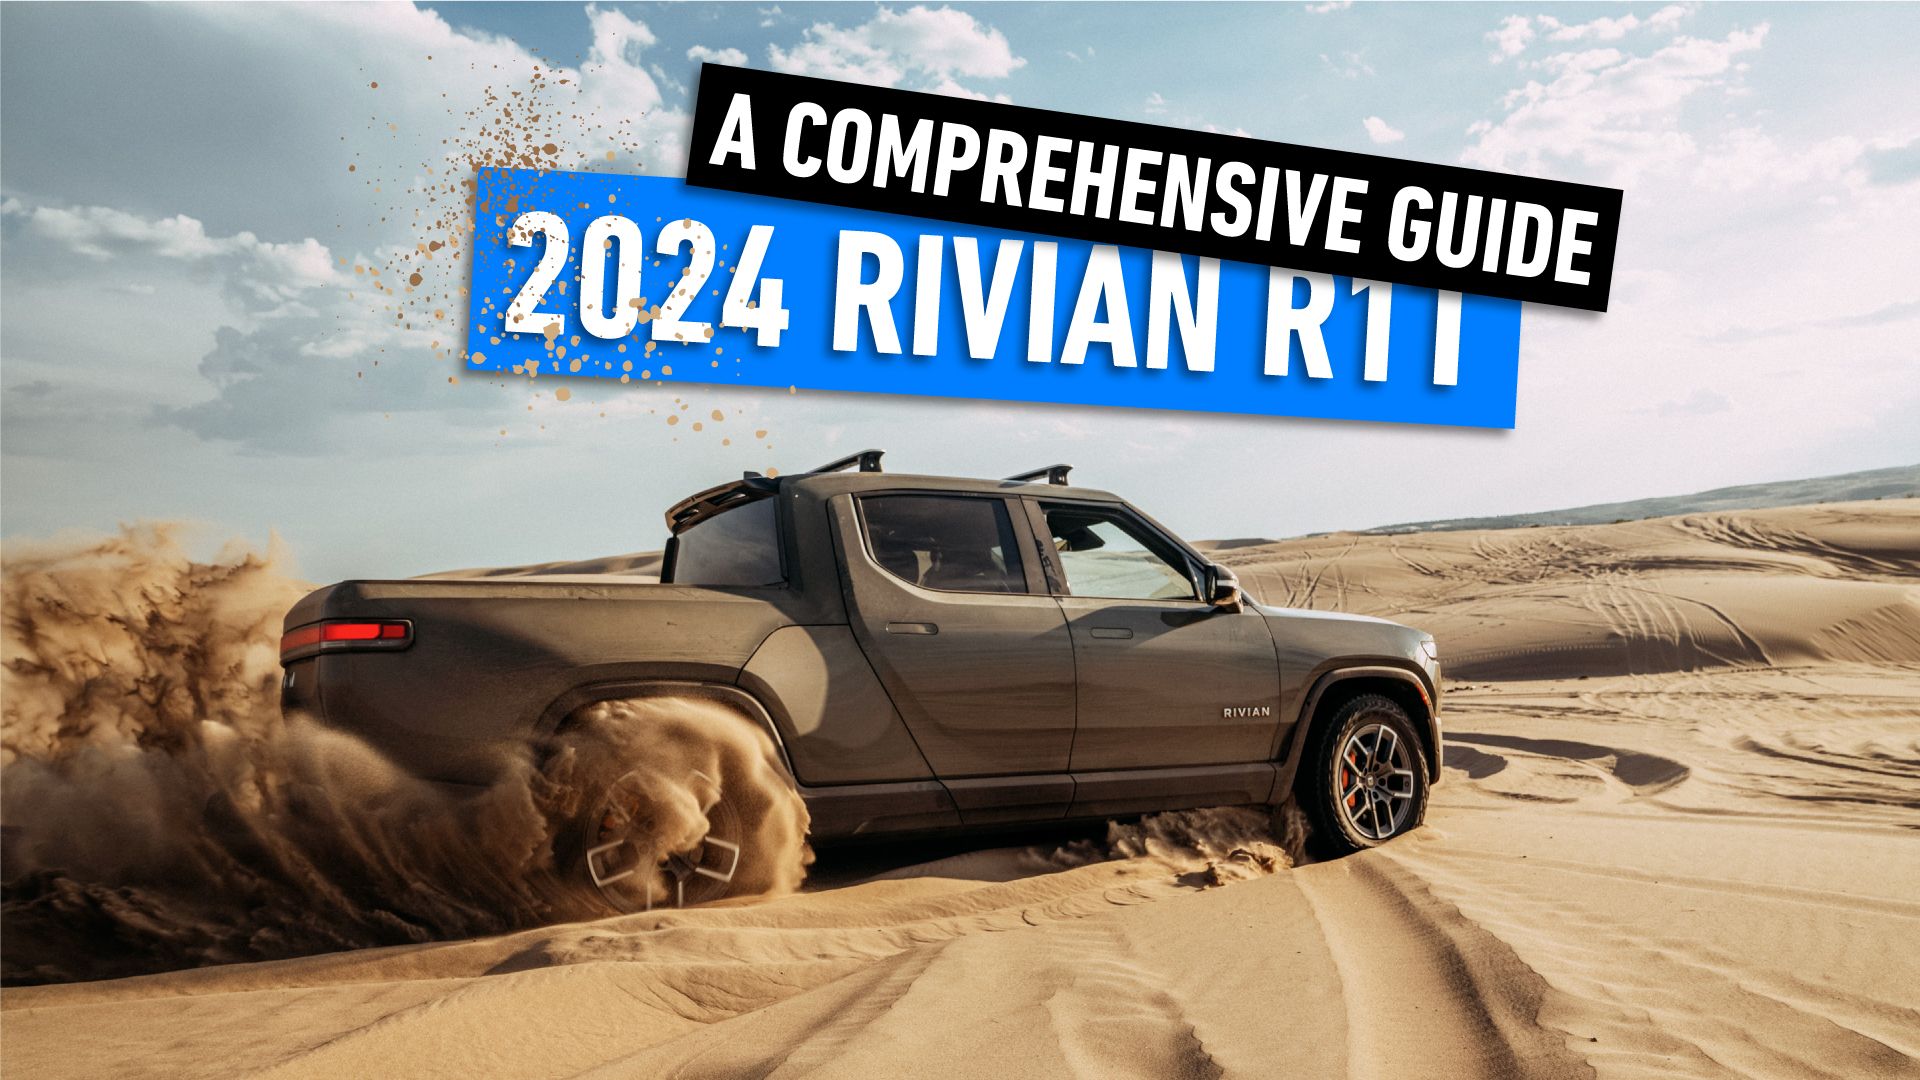 Rivian R1T A Comprehensive Guide custom image